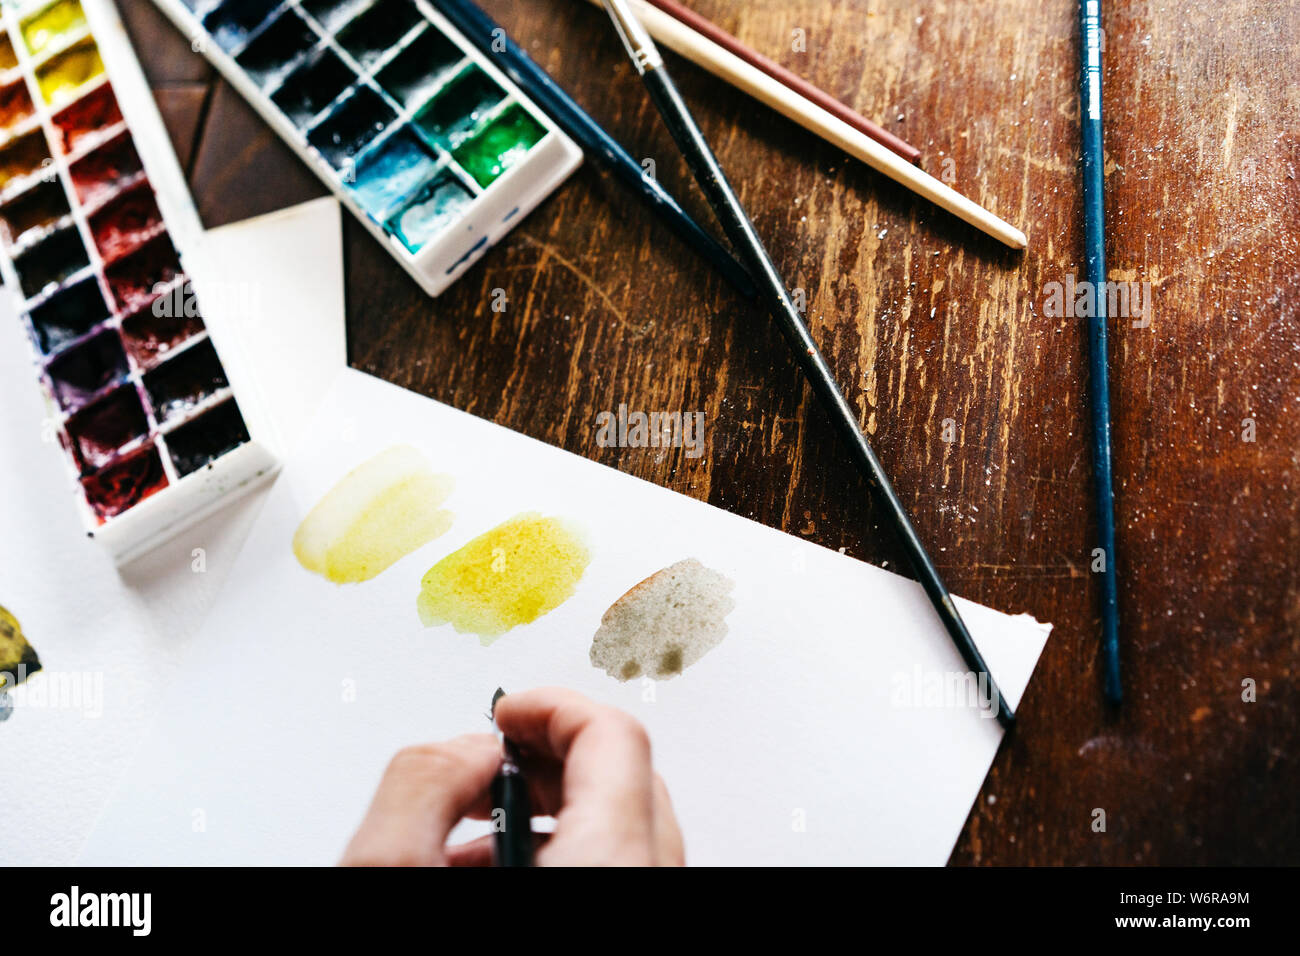 Serie di acquerelli di vernici e pennelli. Workshop di strumenti di disegno Foto Stock